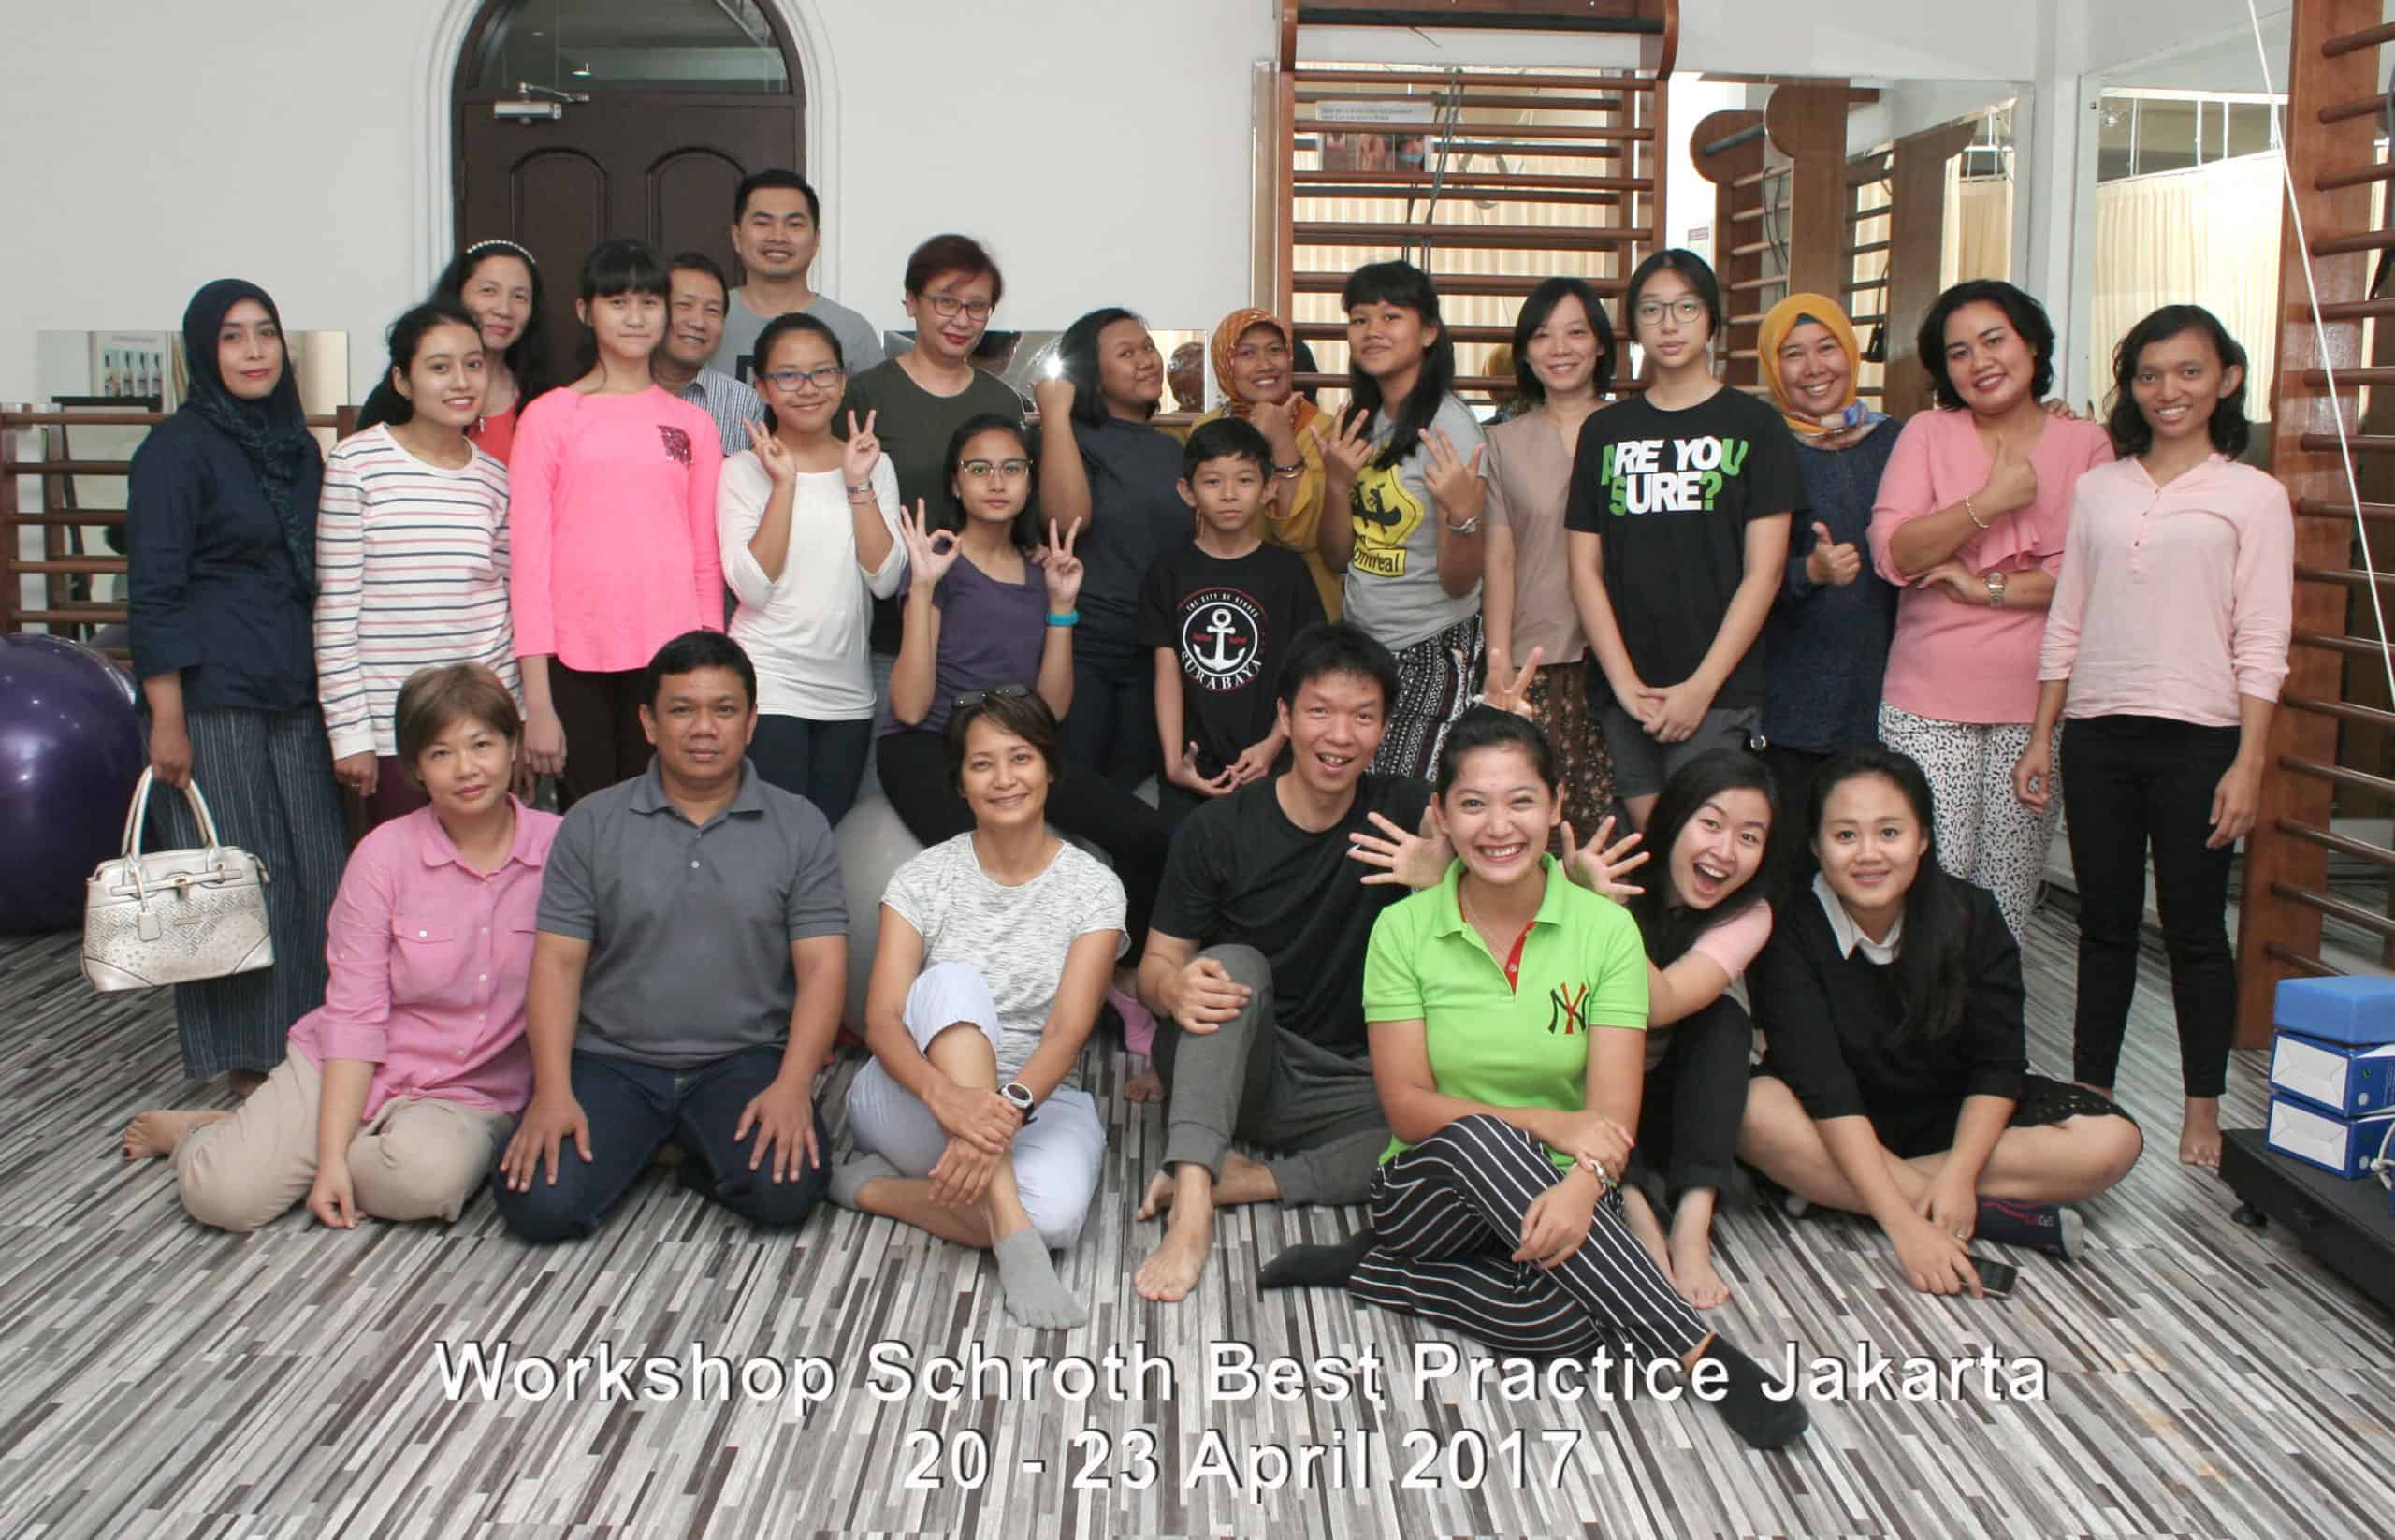 Workshop Schroth Best Practice April 2017 Jakarta